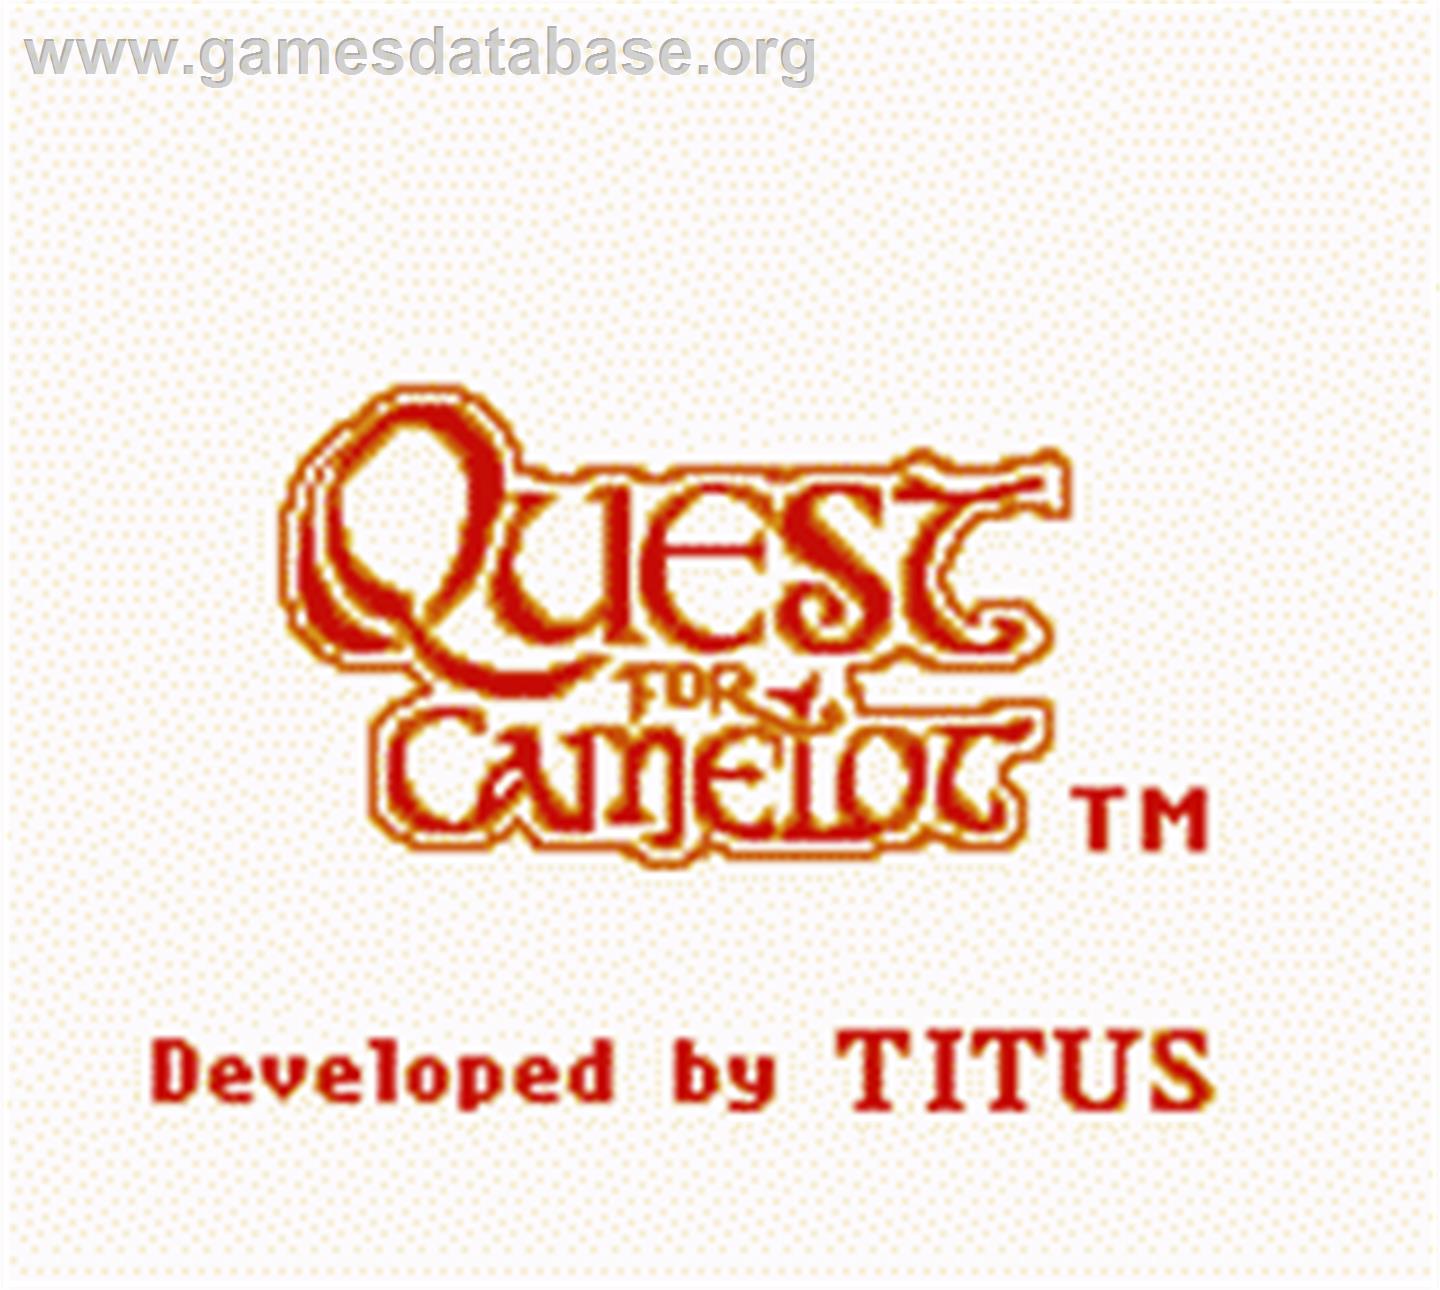 Quest for Camelot - Nintendo Game Boy Color - Artwork - Title Screen